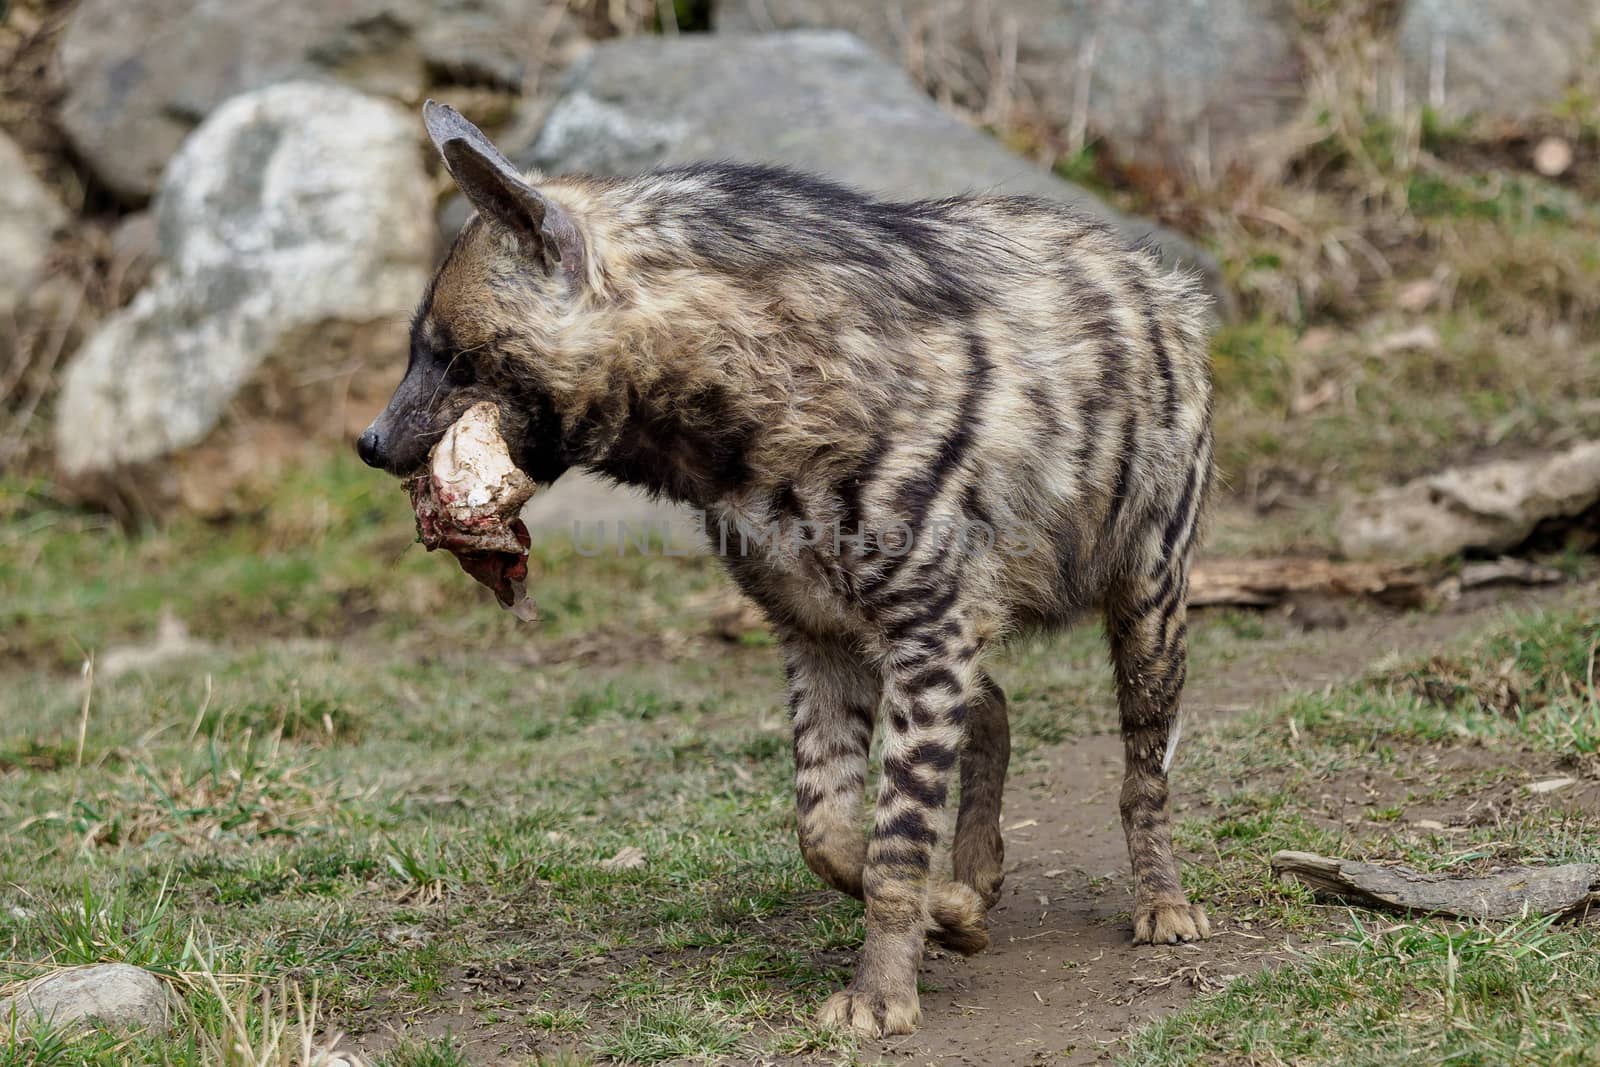 A wounded hyena. Striped hyena (Hyaena hyaena sultana)